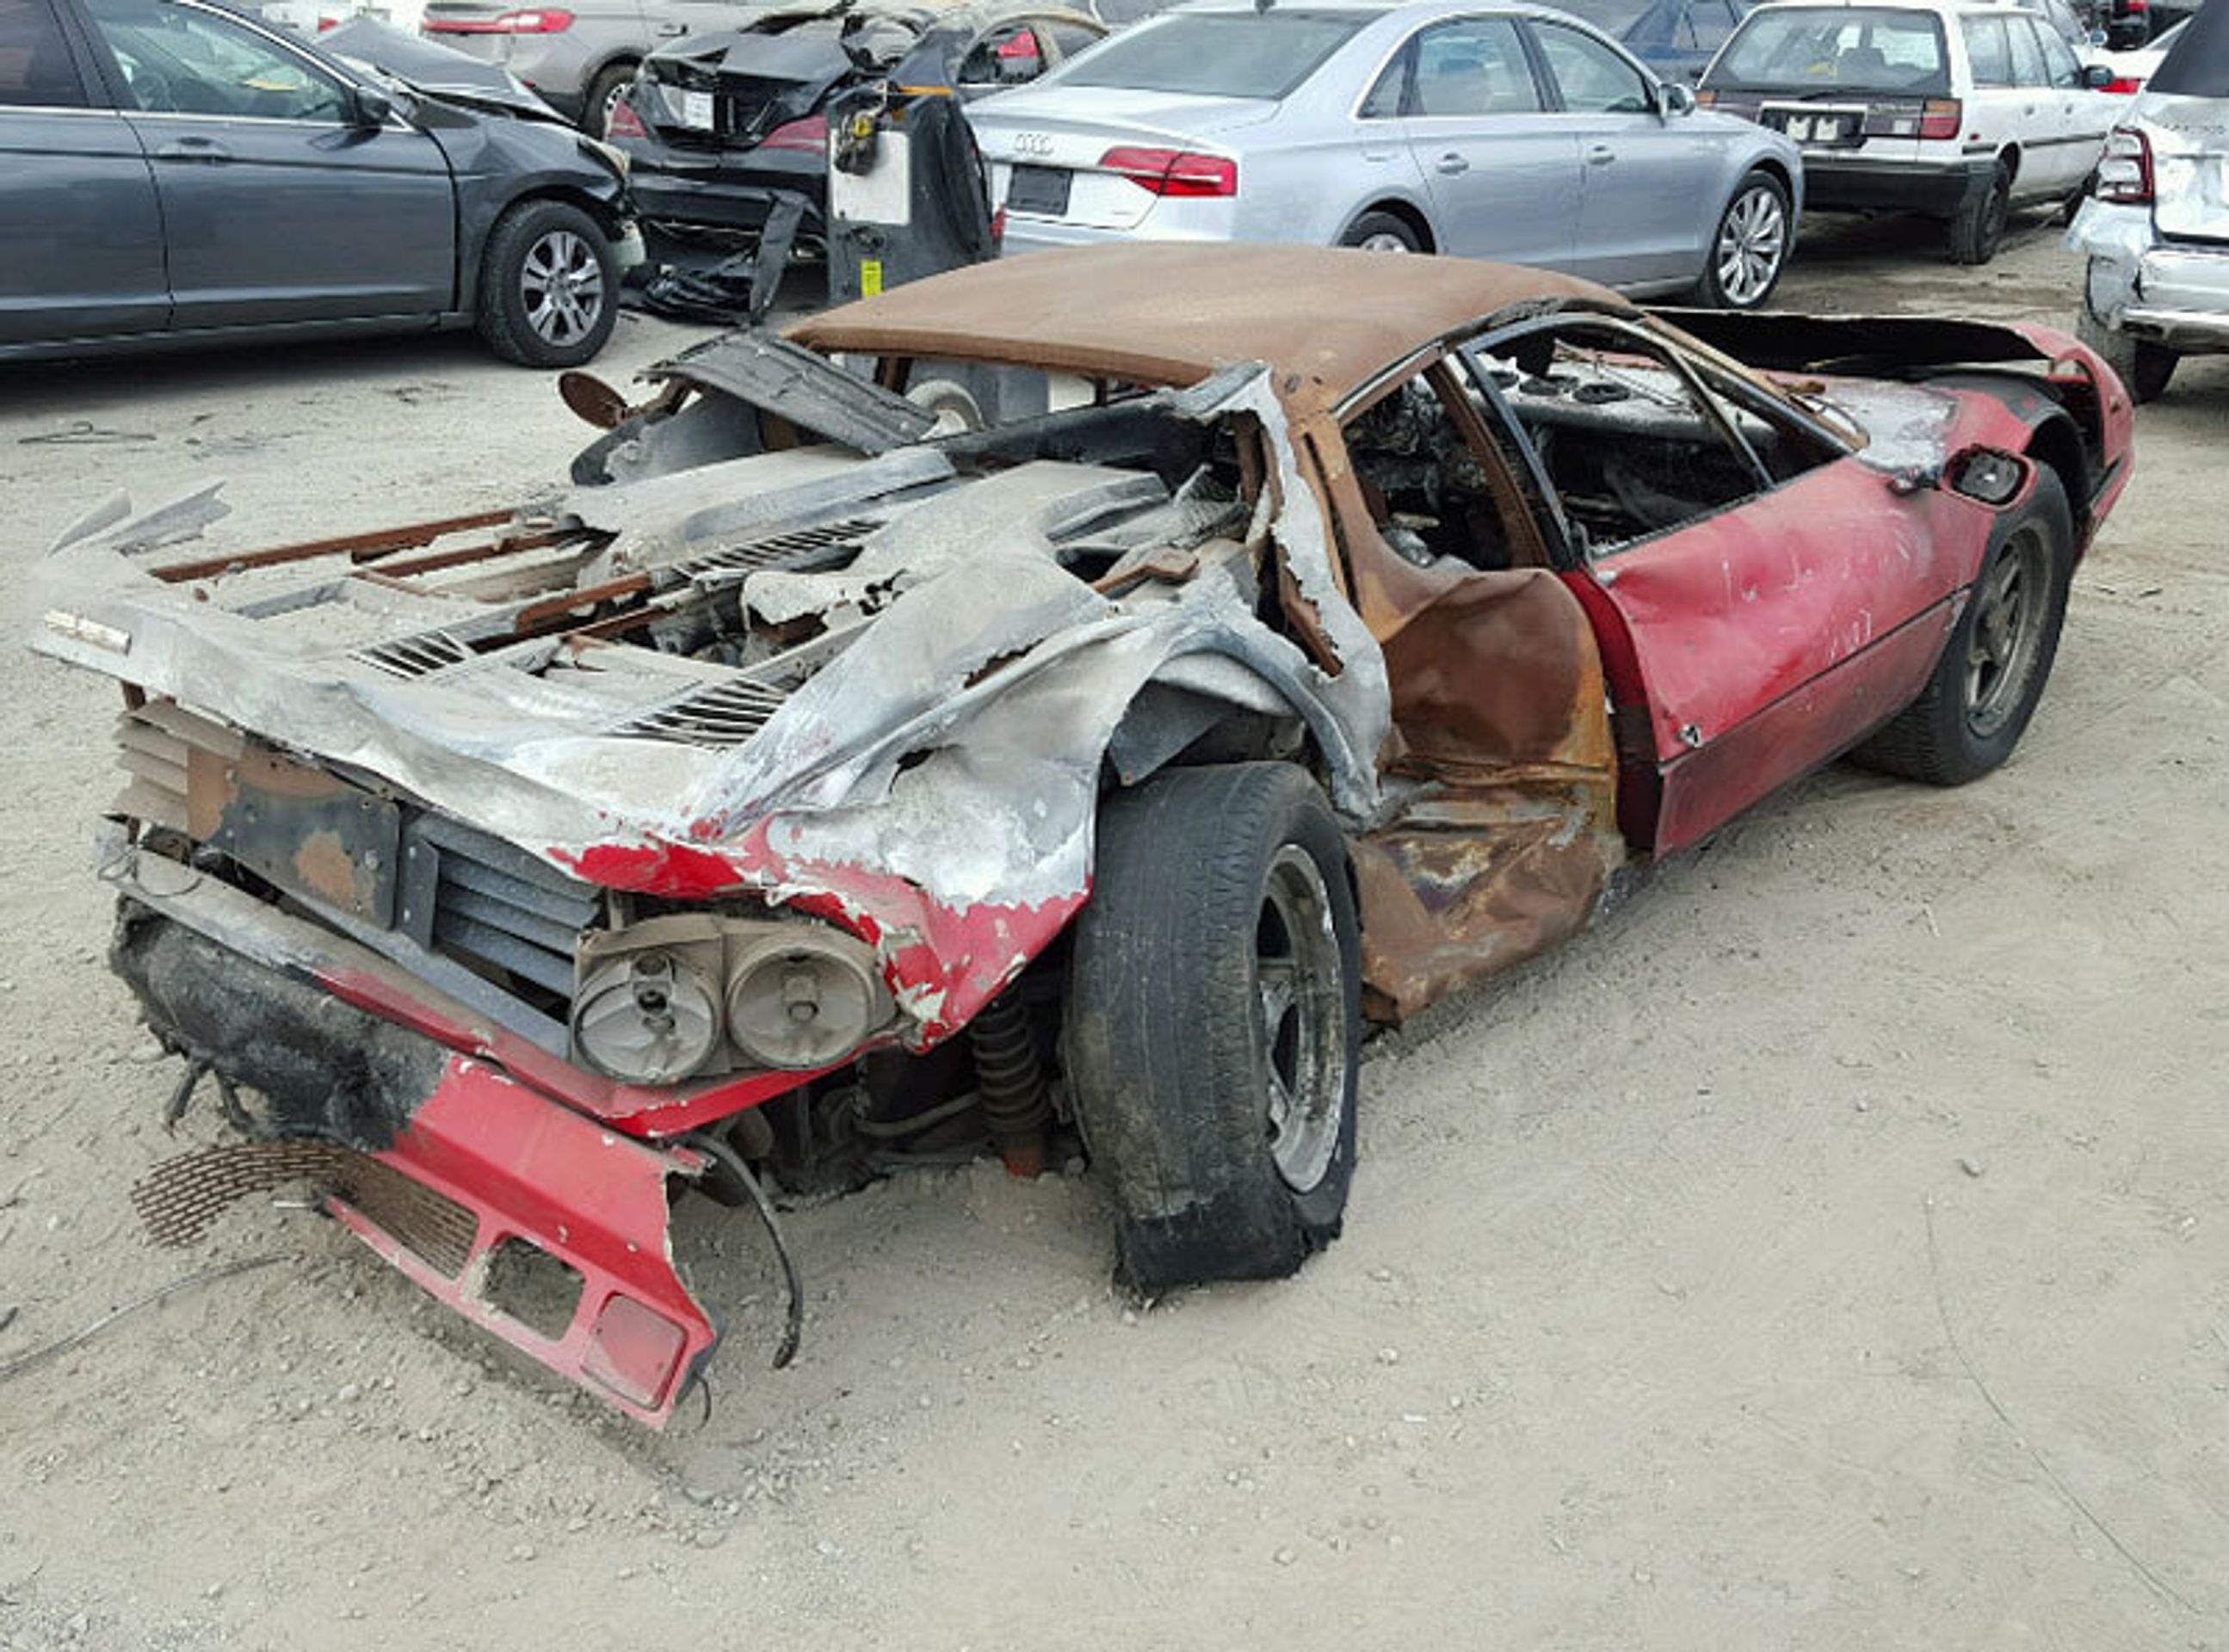 Ferrari - 17 - FOTOGALERIE: Torzo ohořelého Ferrari 512 bylo vydraženo (4/10)